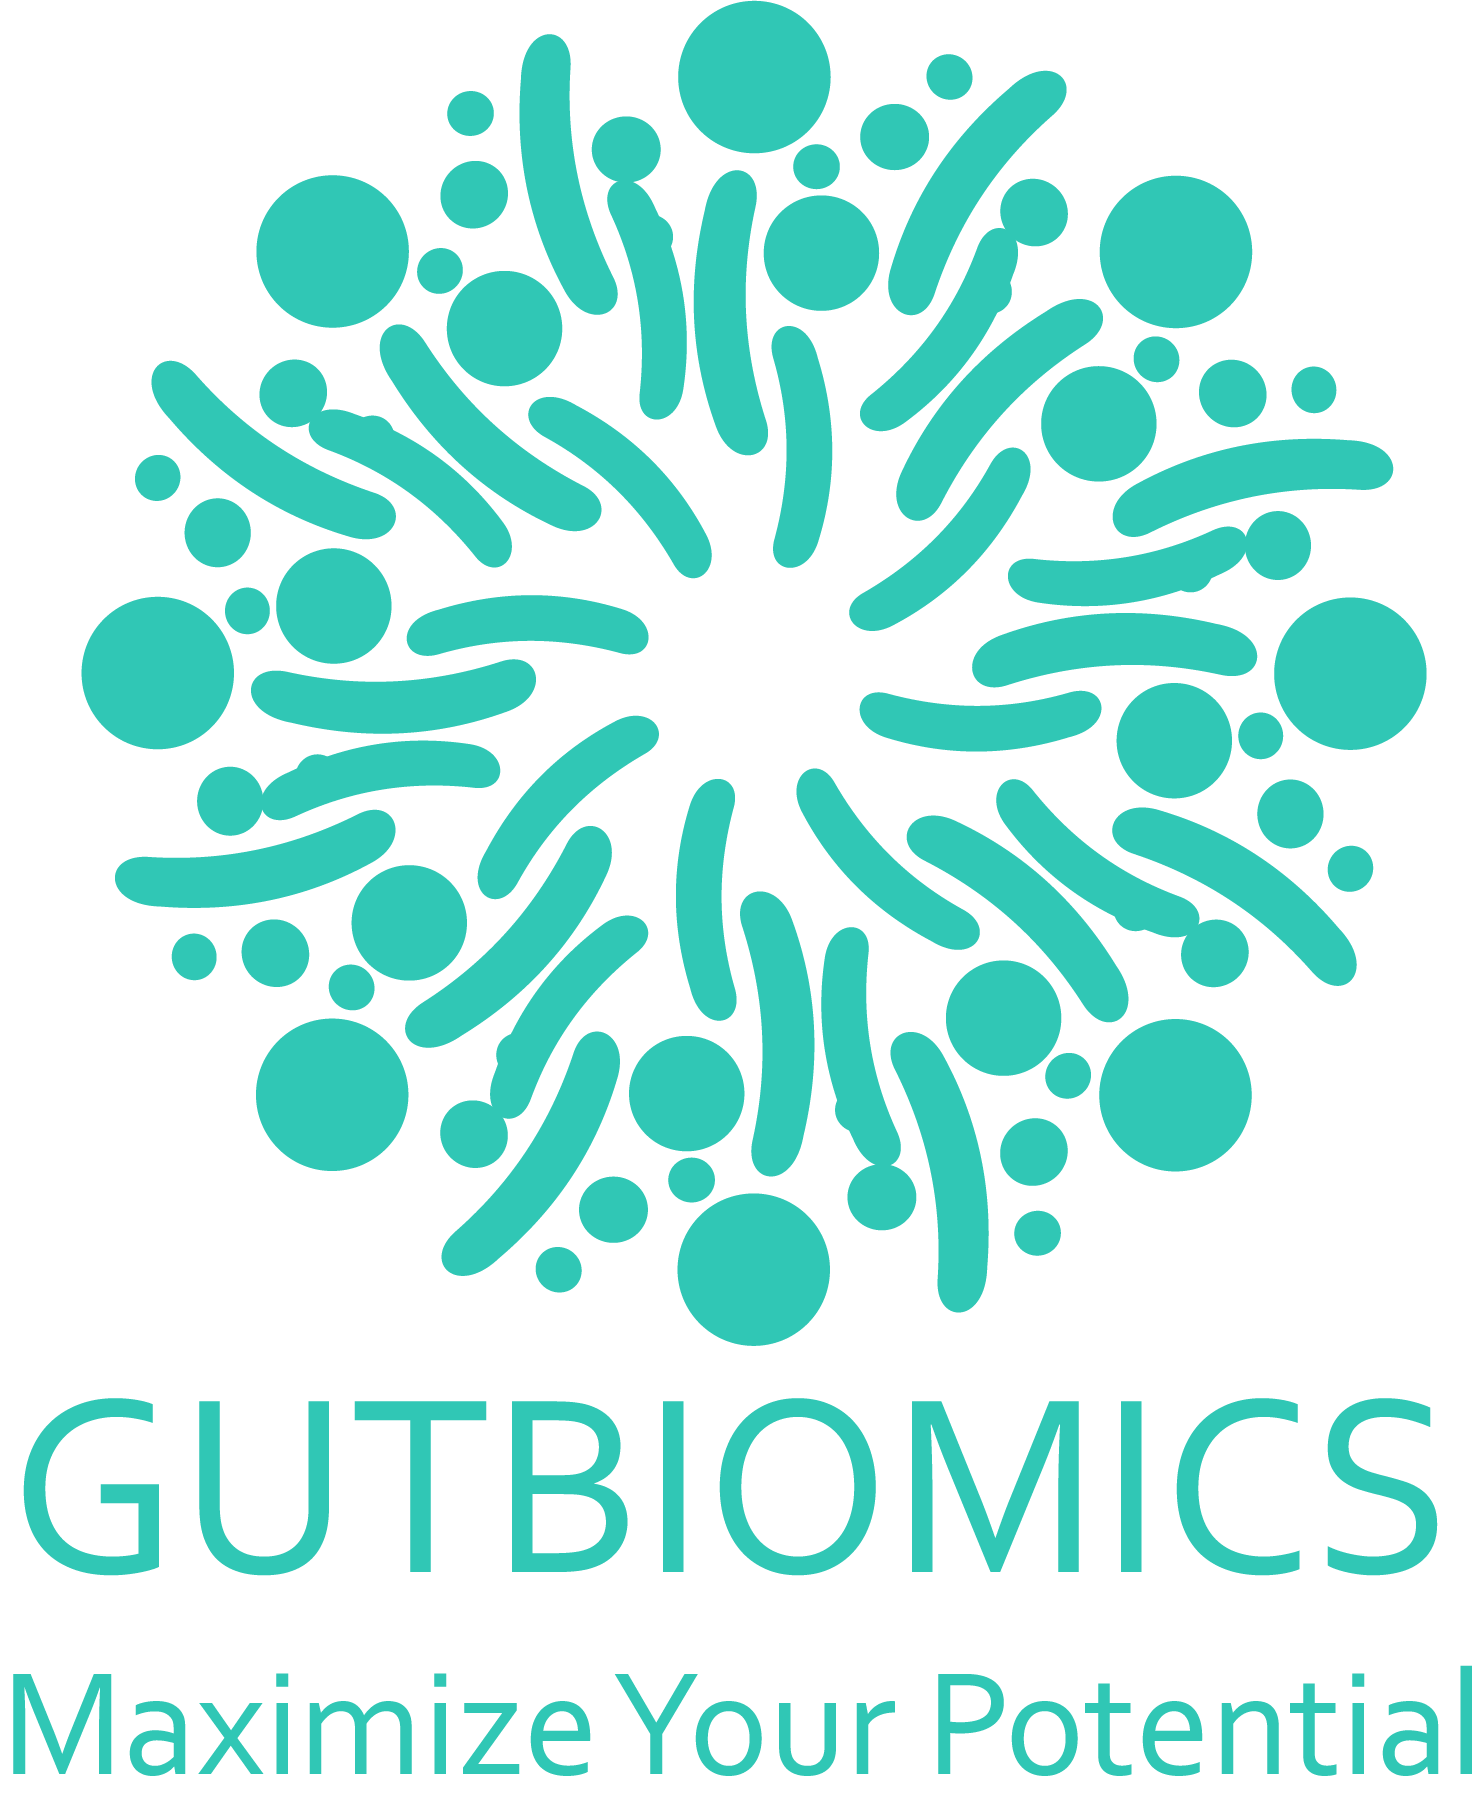 Gutbiomics